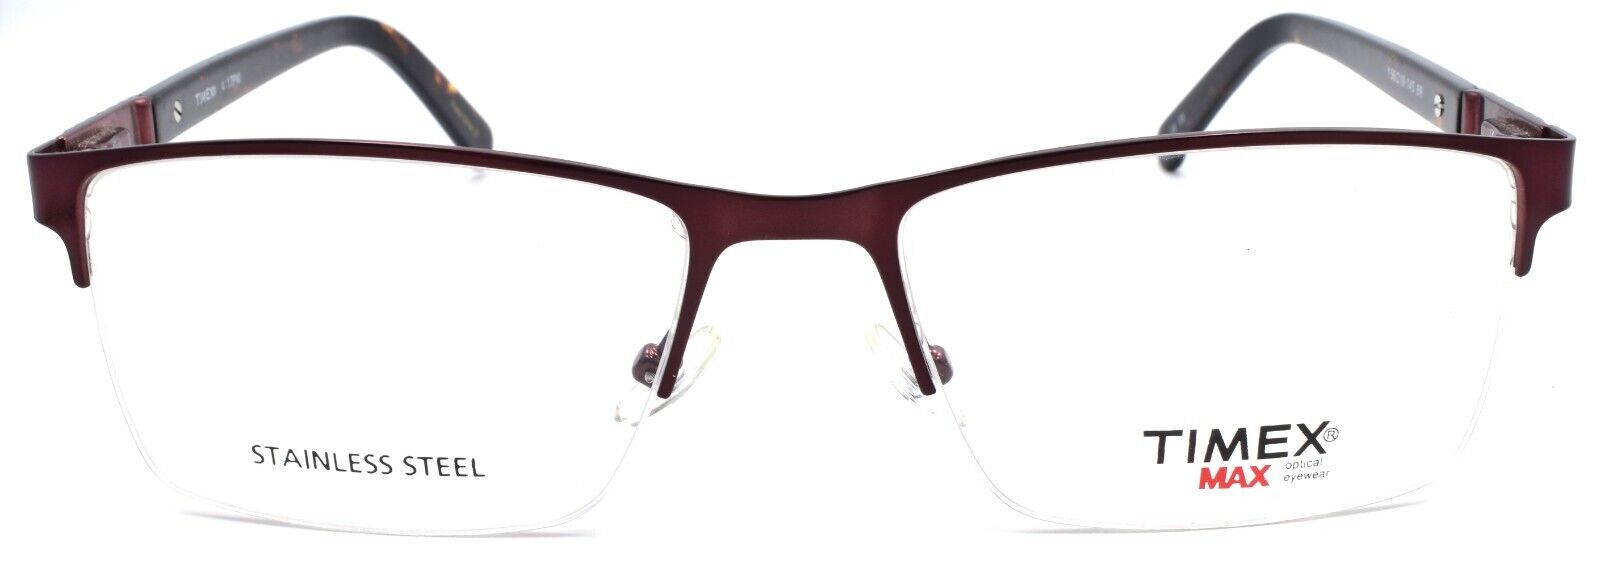 2-Timex 4:17 PM Men's Eyeglasses Frames Half-rim 56-18-145 Brown-715317152259-IKSpecs